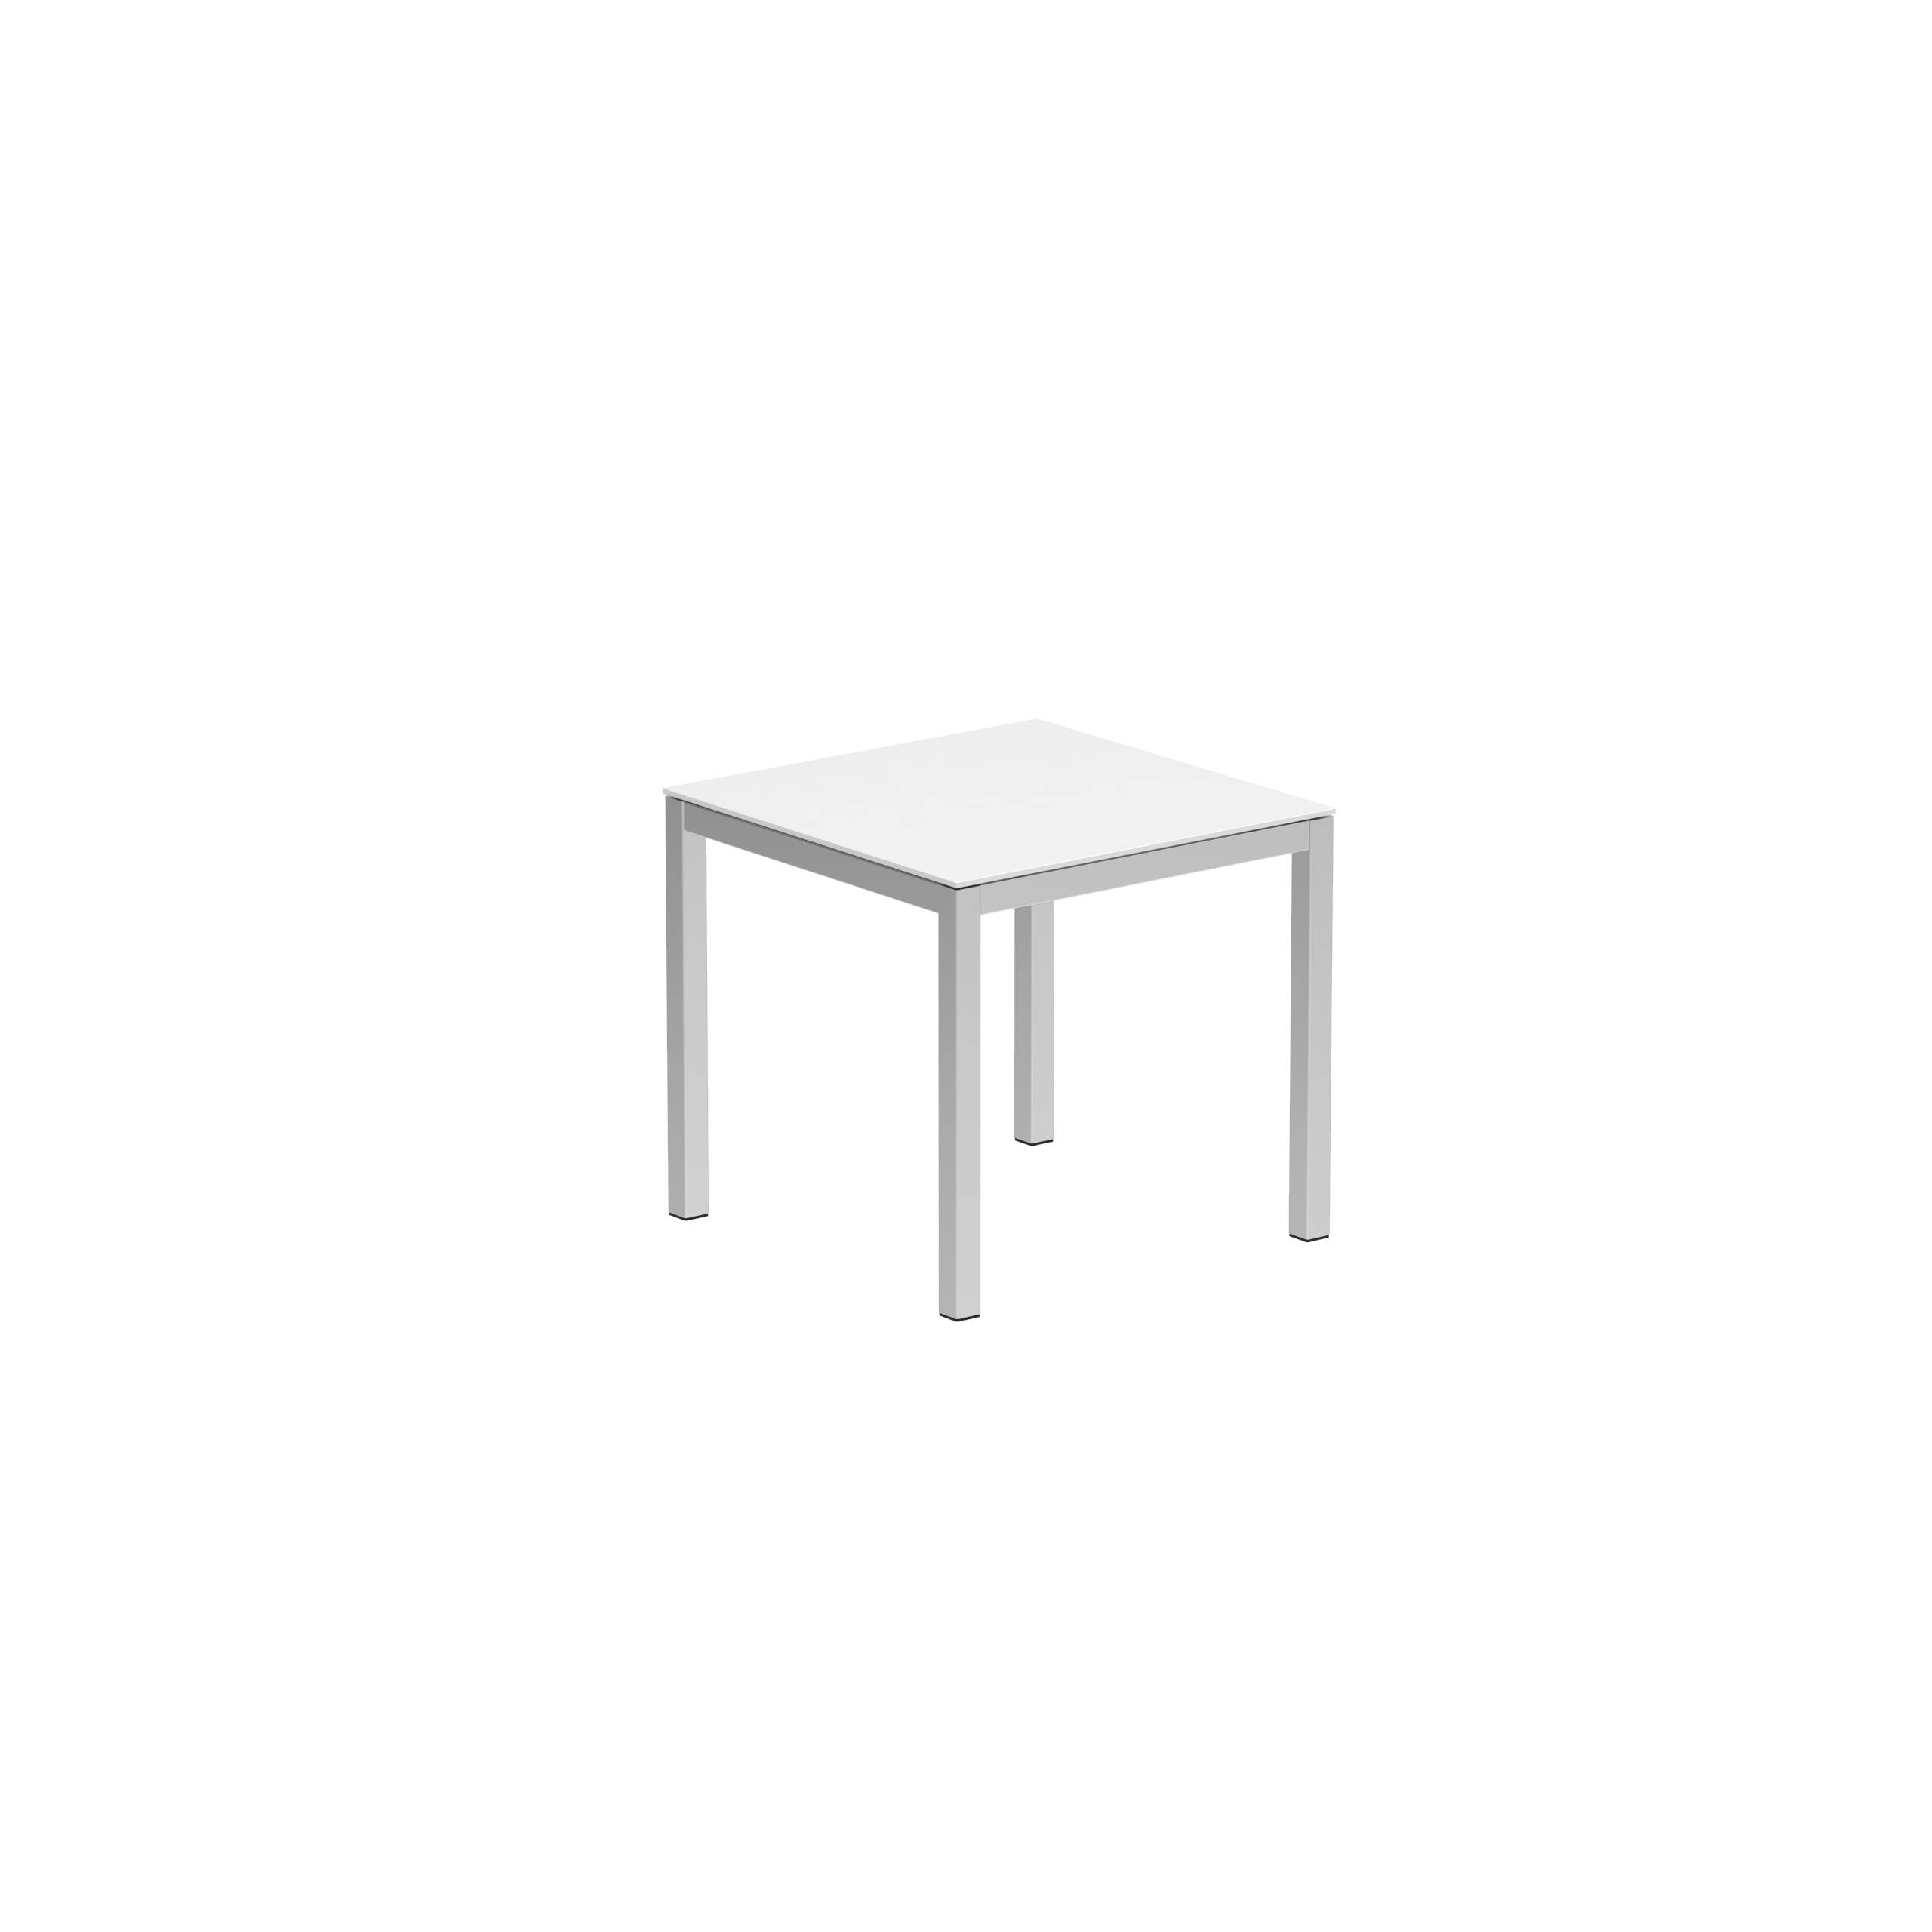 Taboela Table 80x80cm Ep + Ceramic Top White